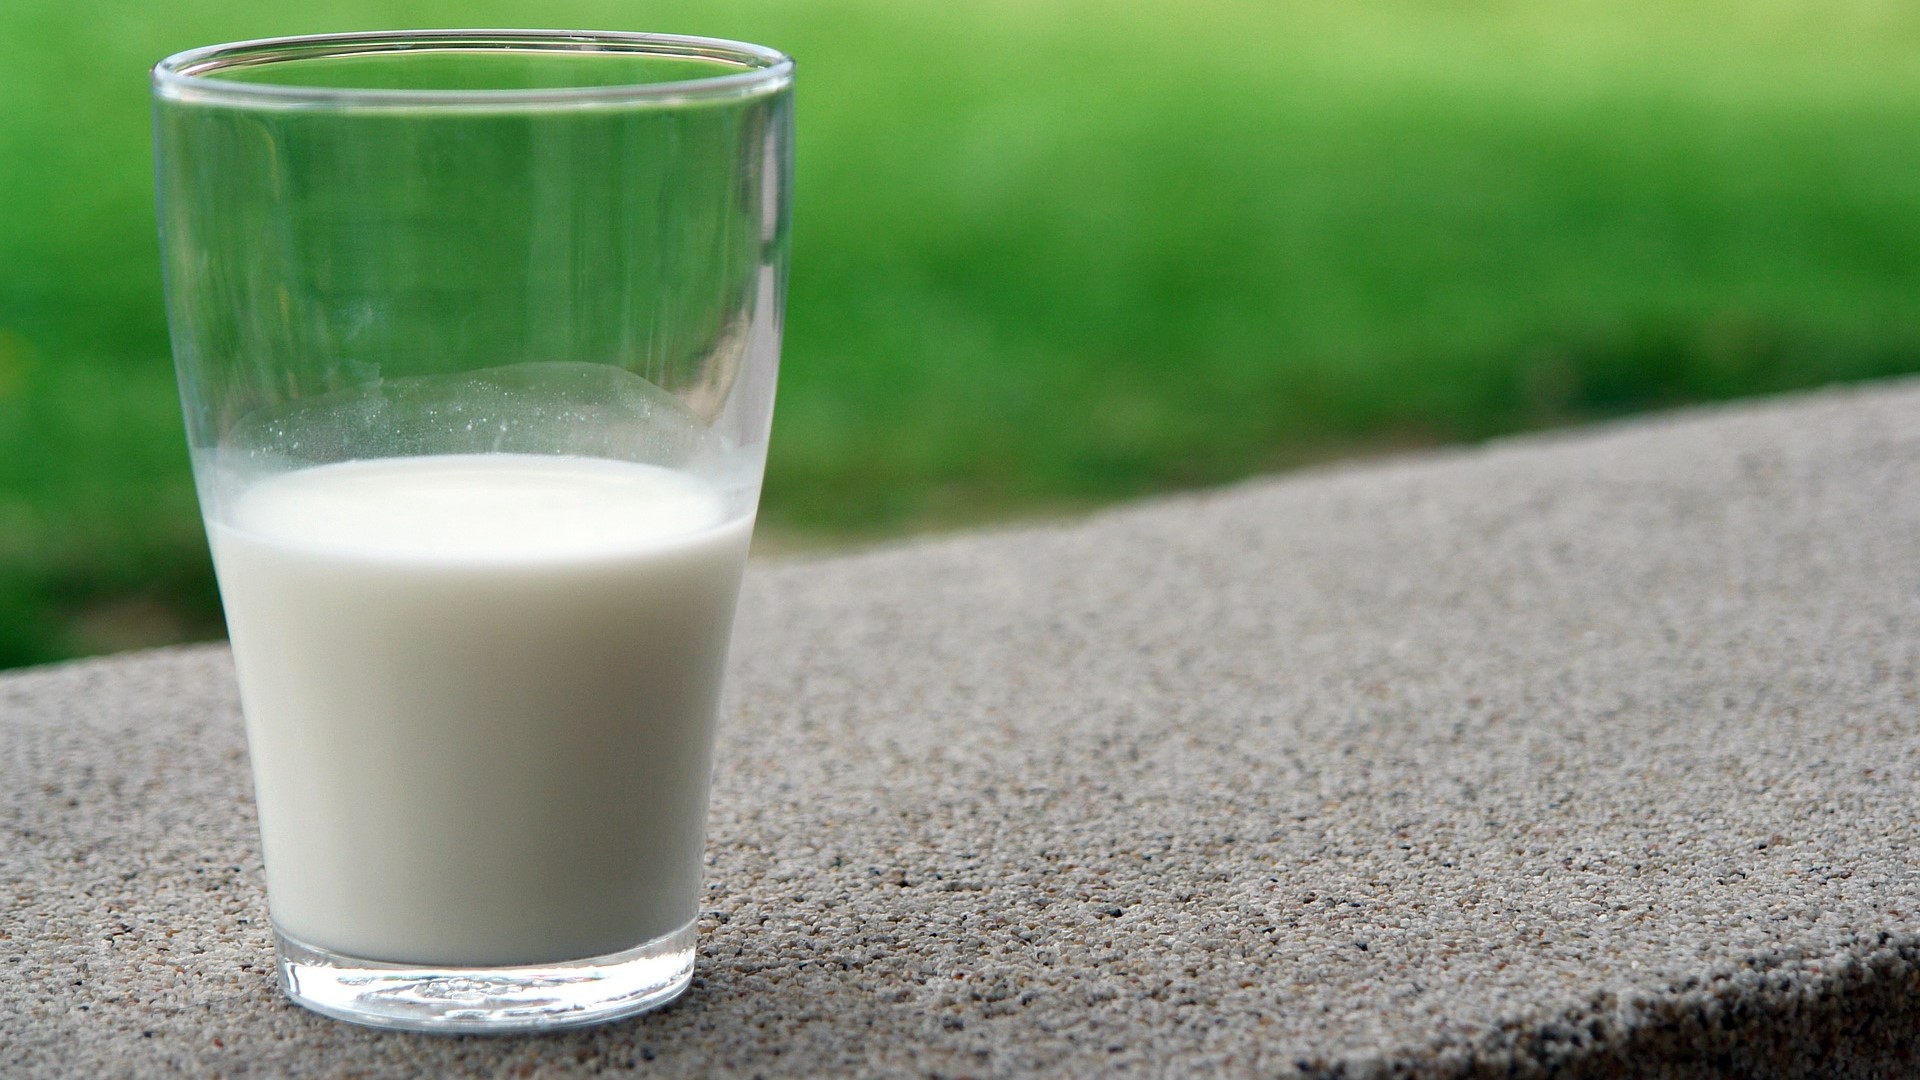 Raw milk in a clear glass.